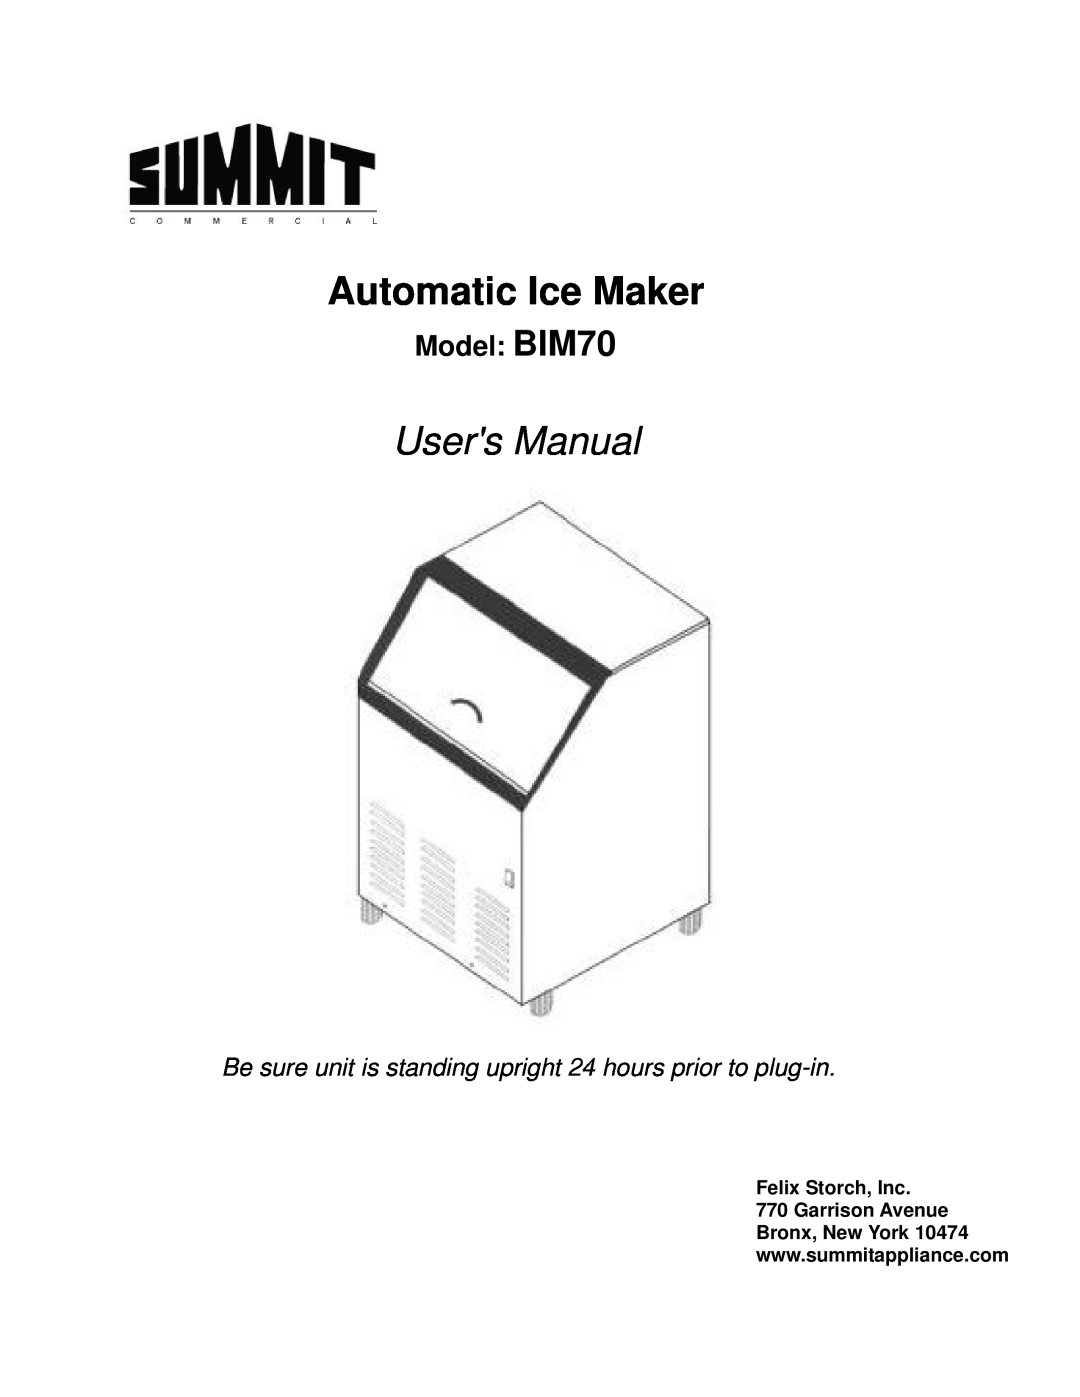 Summit user manual Automatic Ice Maker, Model BIM70, Felix Storch, Inc 